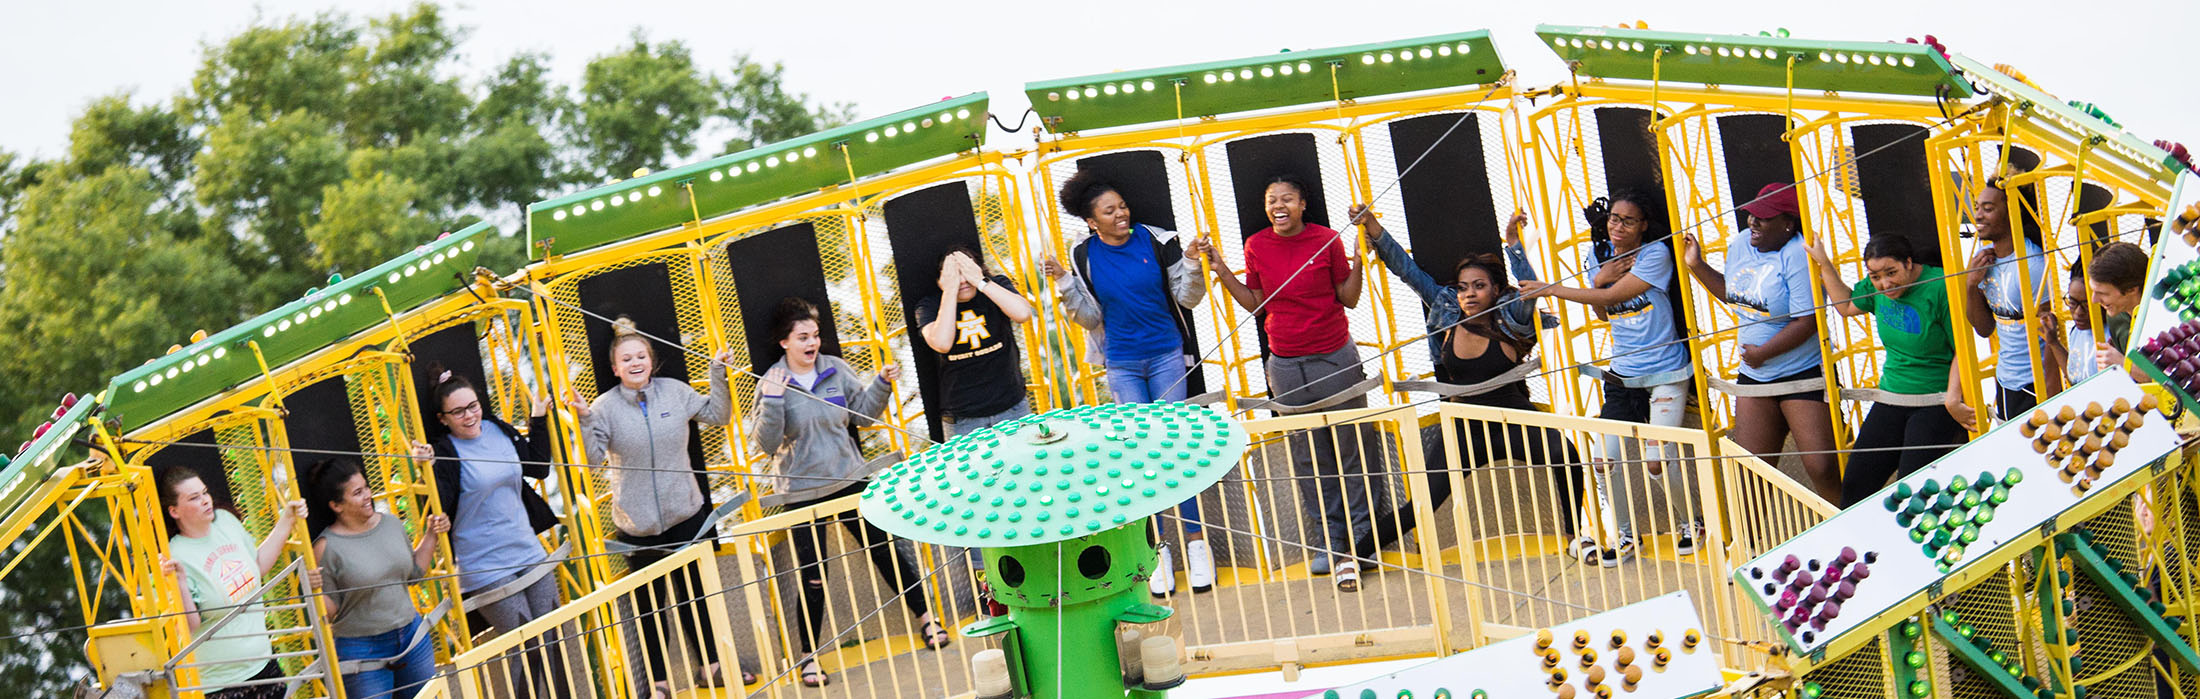 Students enjoy a carnival ride at Summer Send Off 2018